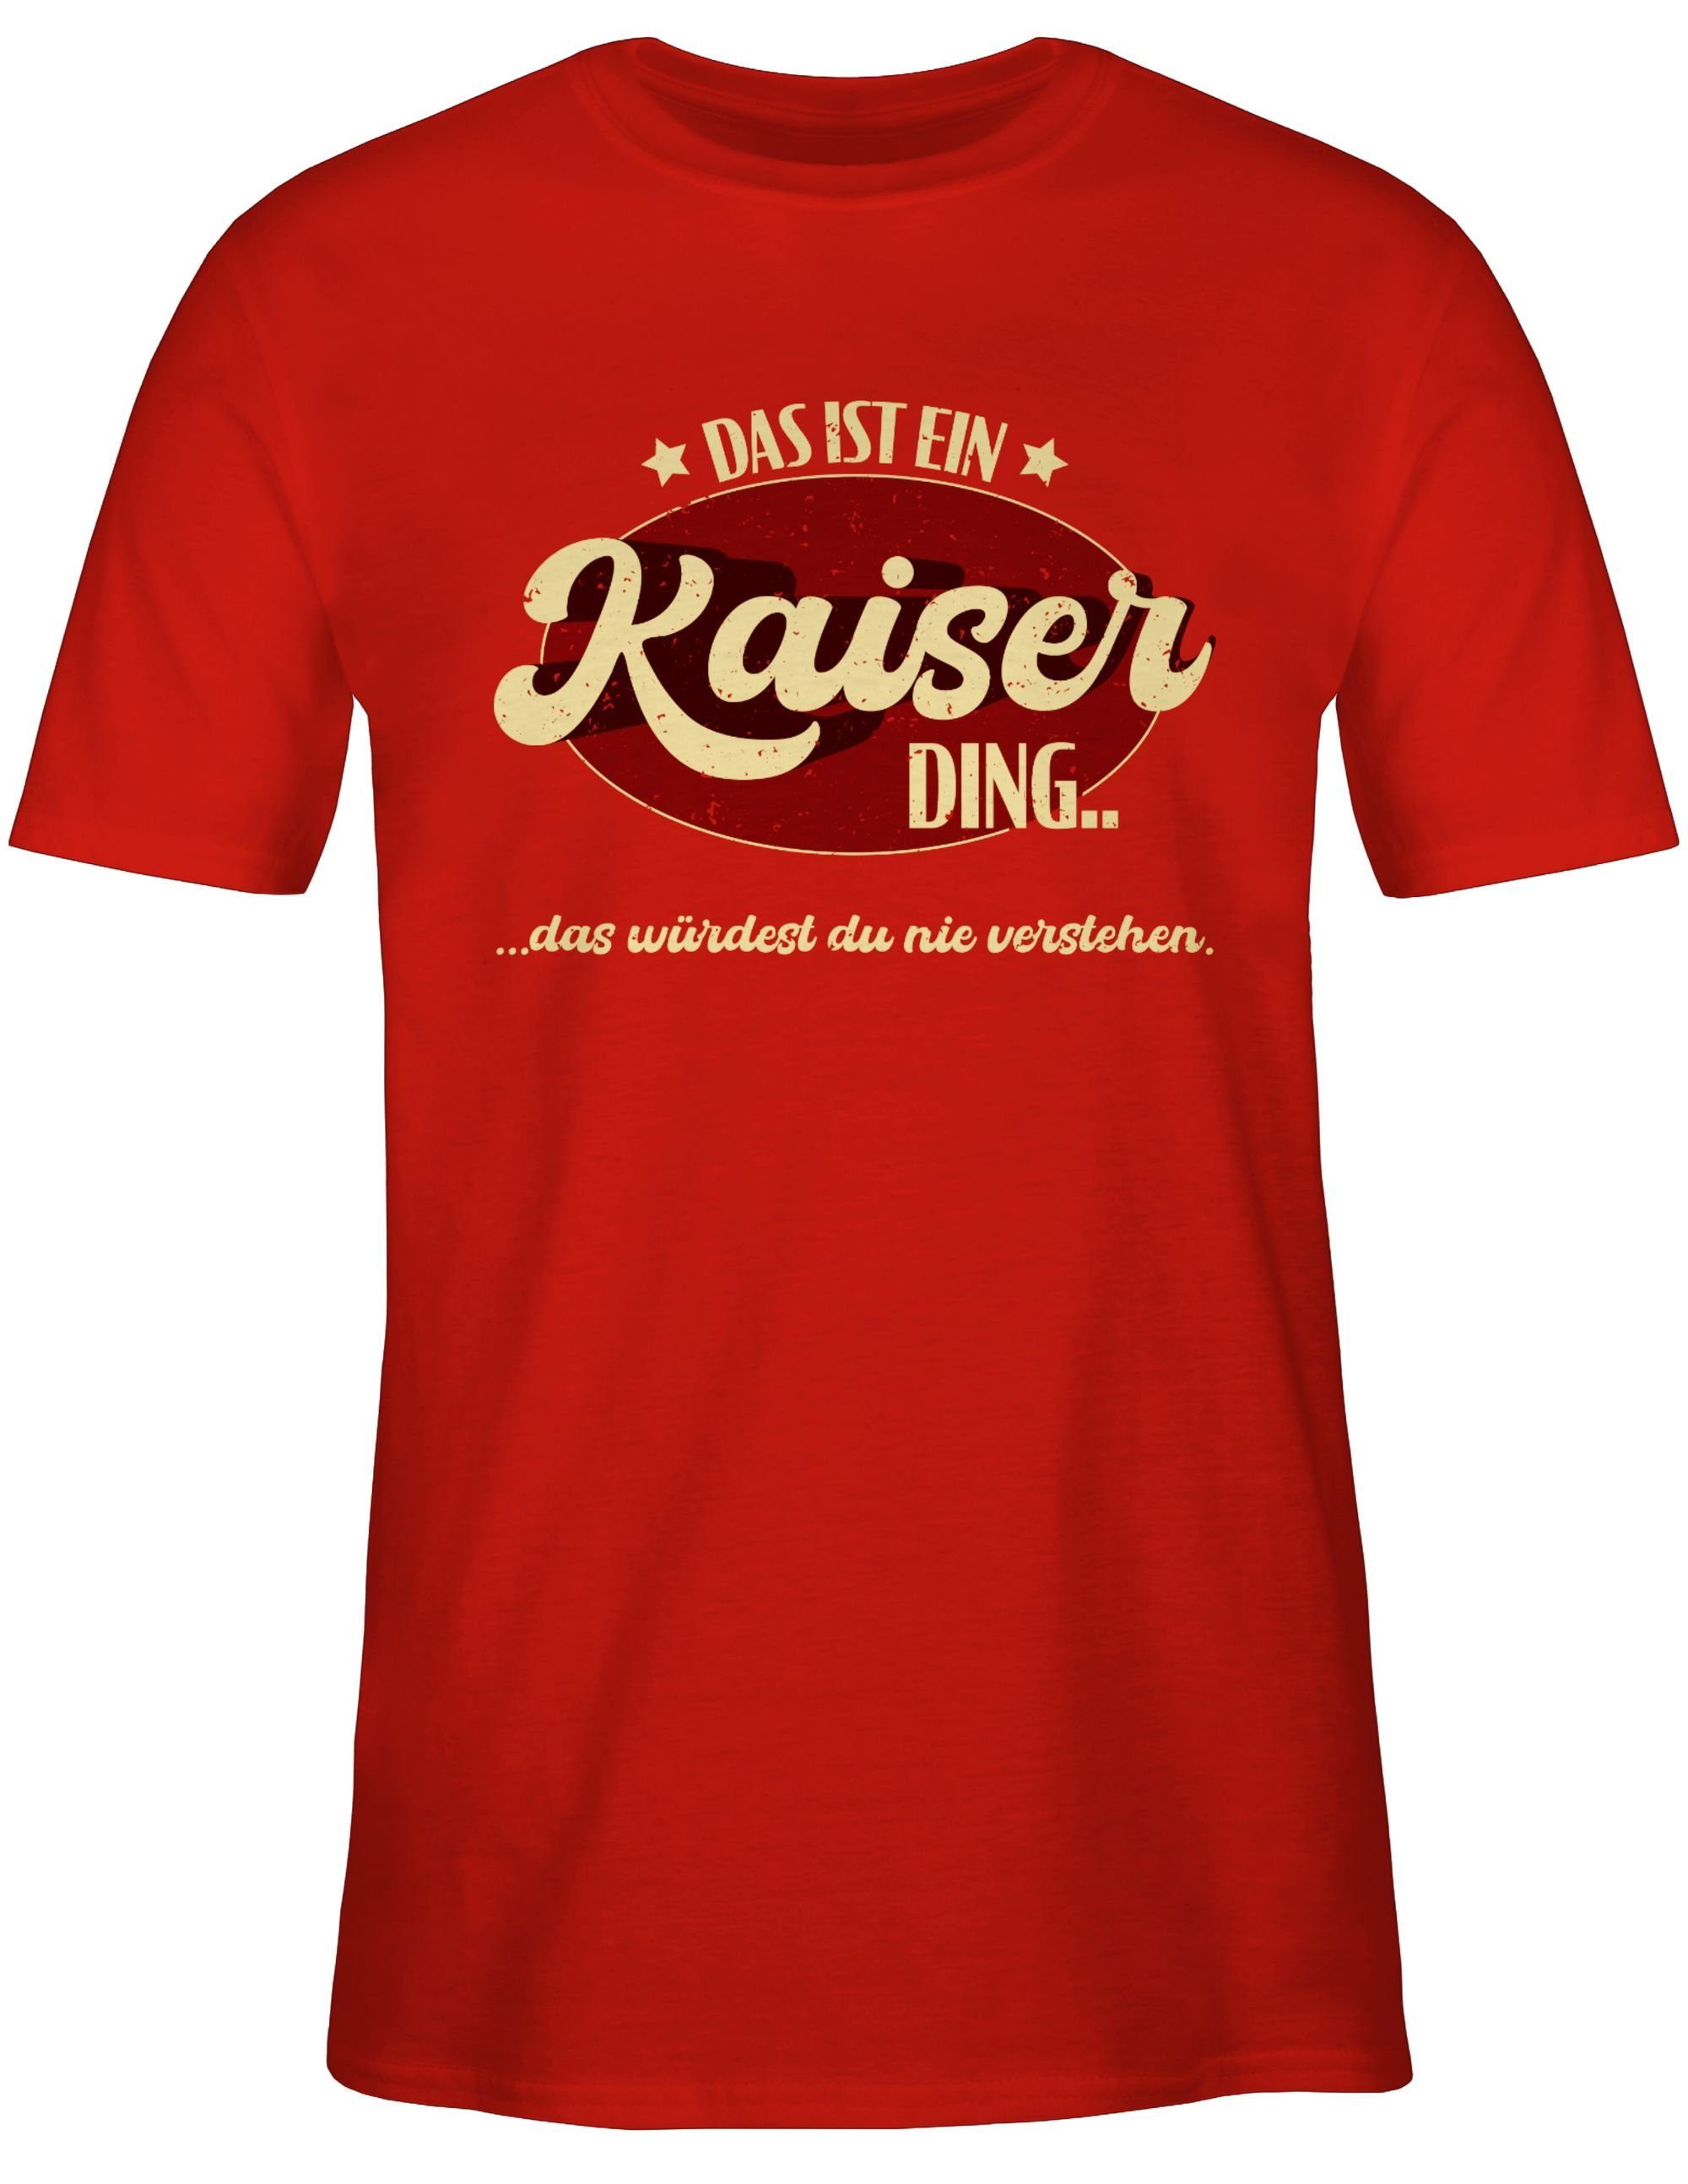 Kaiser Party T-Shirt Rot ist 03 ein - Kaiserding Outfit Schlager Ding Shirtracer Das